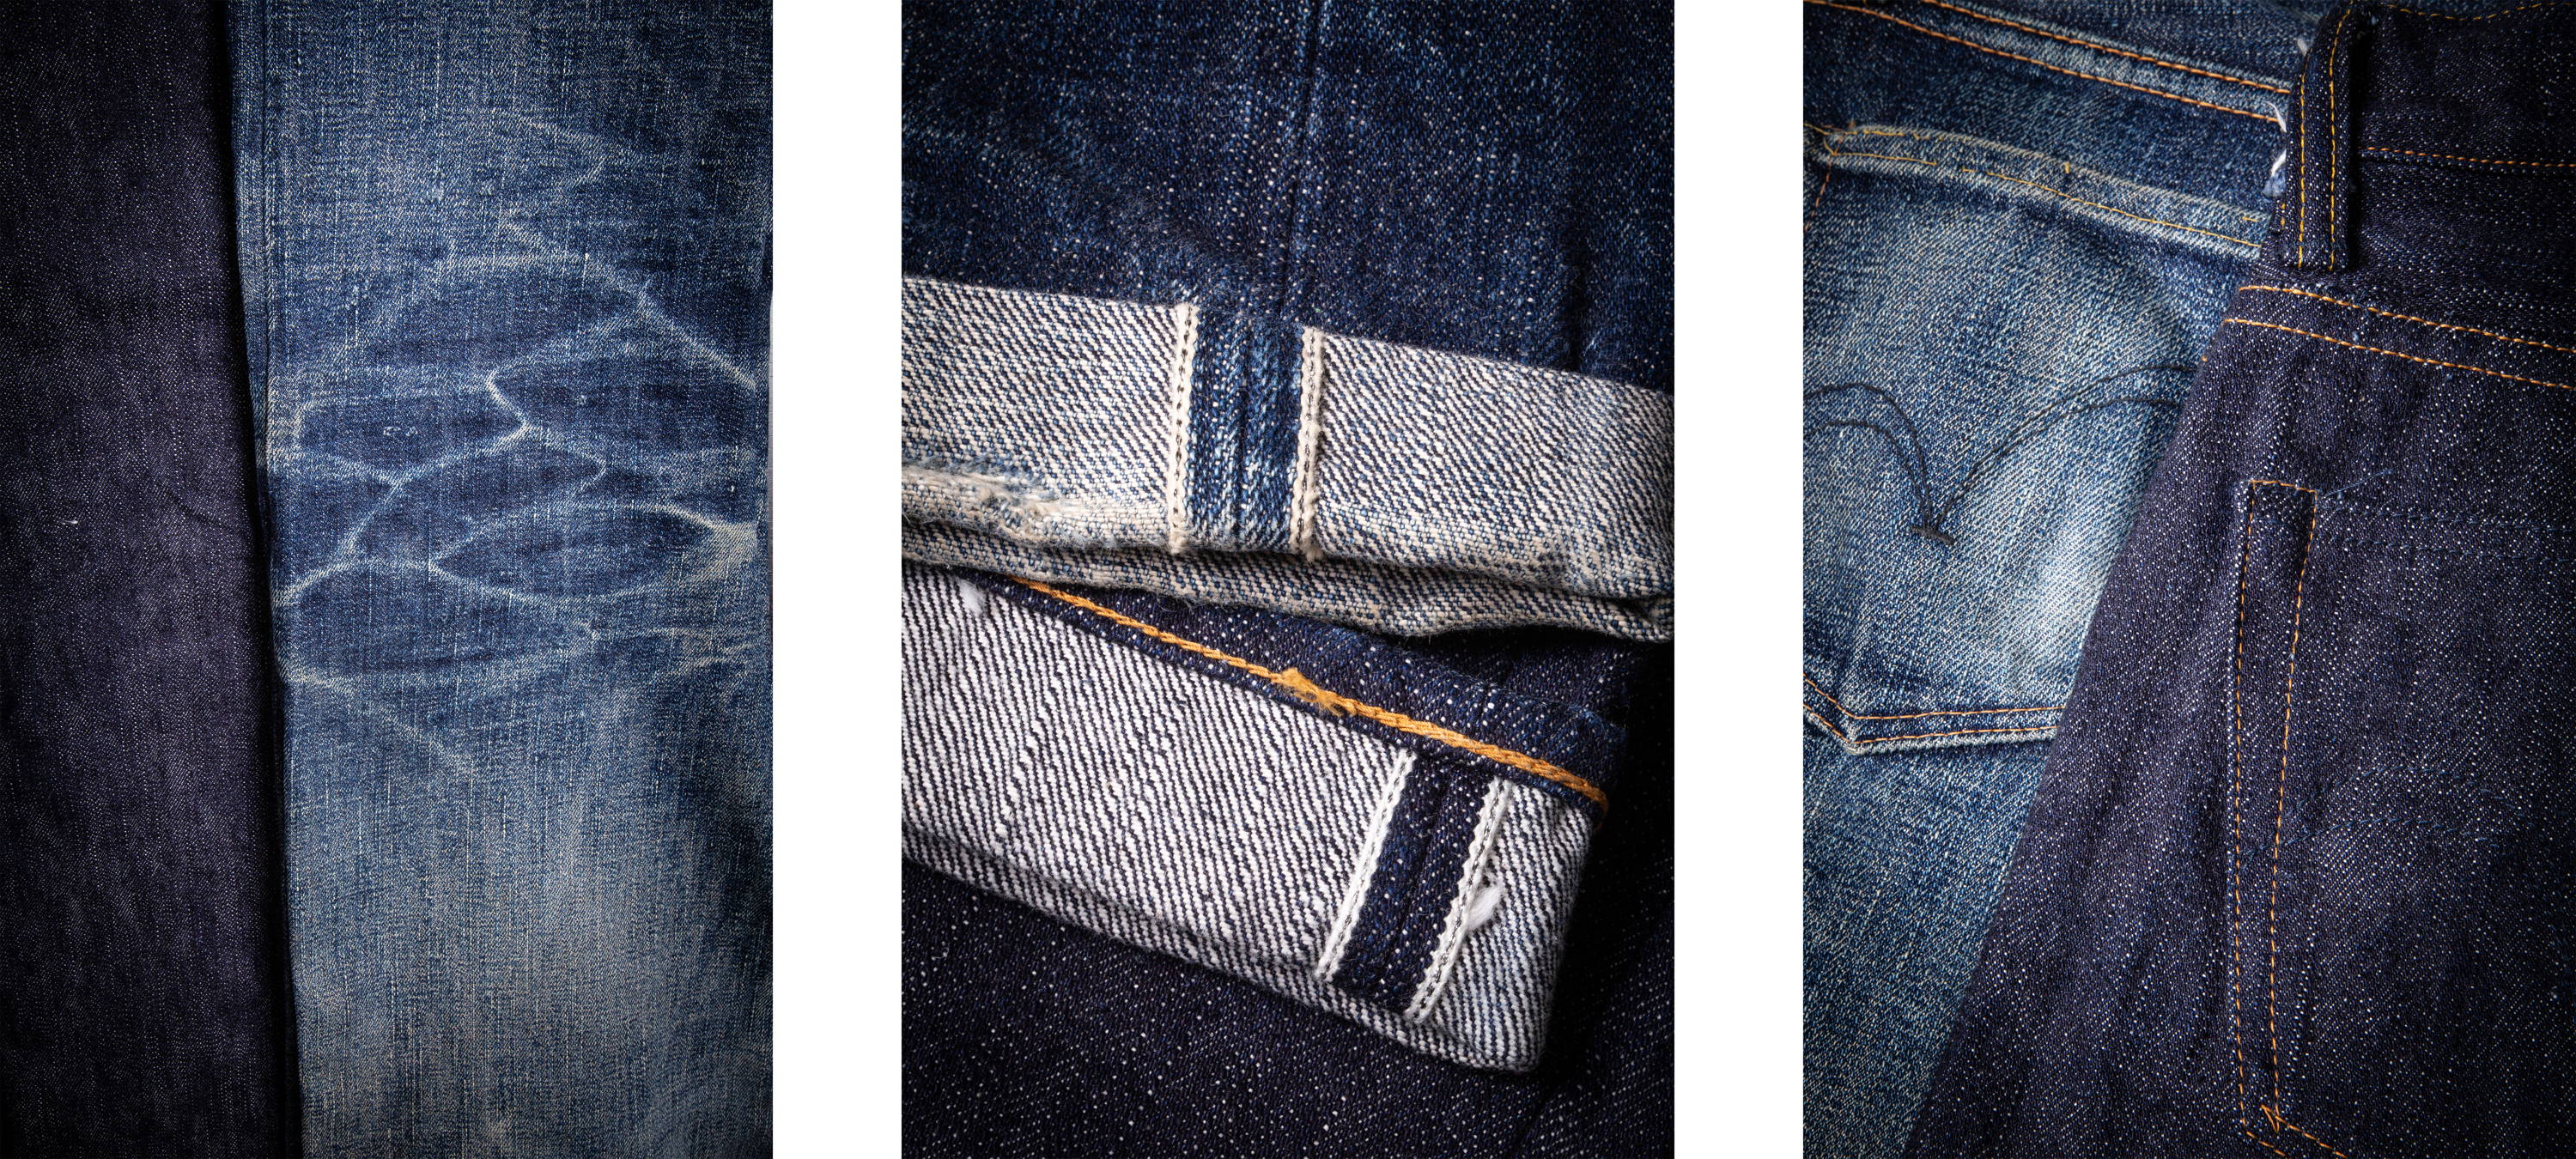 BDD BENZAK Samurai Jeans collaboration denim fading contest